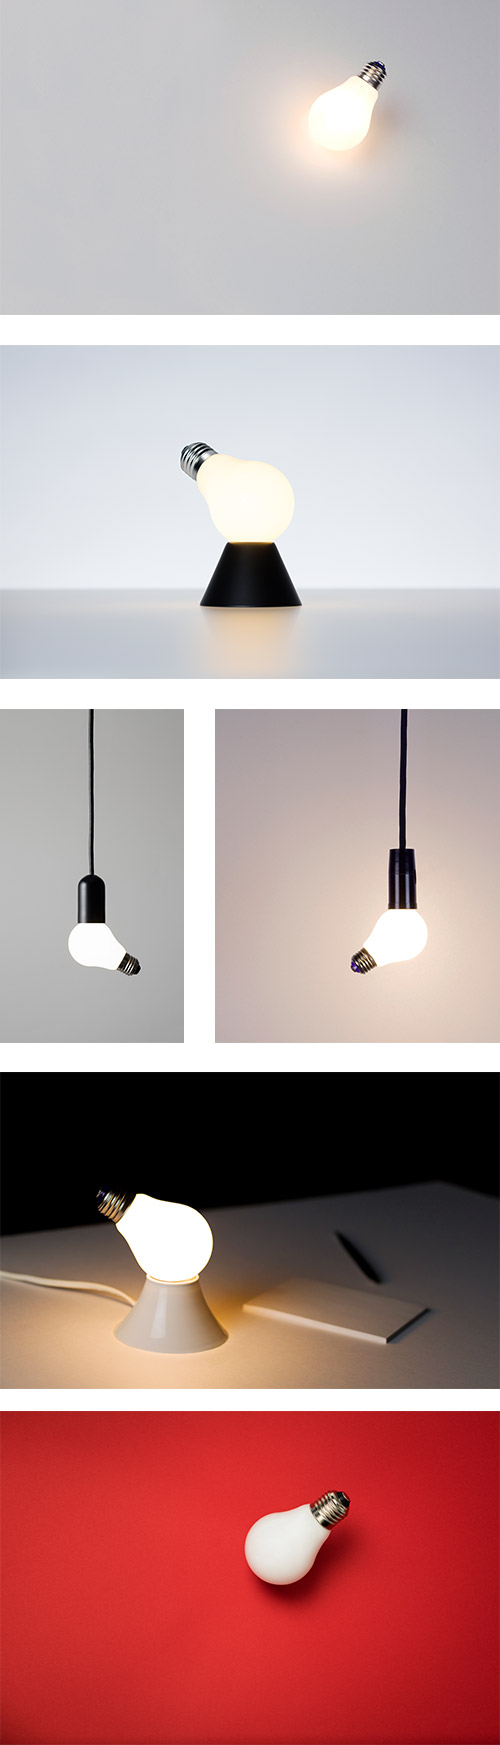 【4/23~4/29精選品牌9折優惠】日本 Perrocaliente Lamp/Lamp LED燈泡 黃光